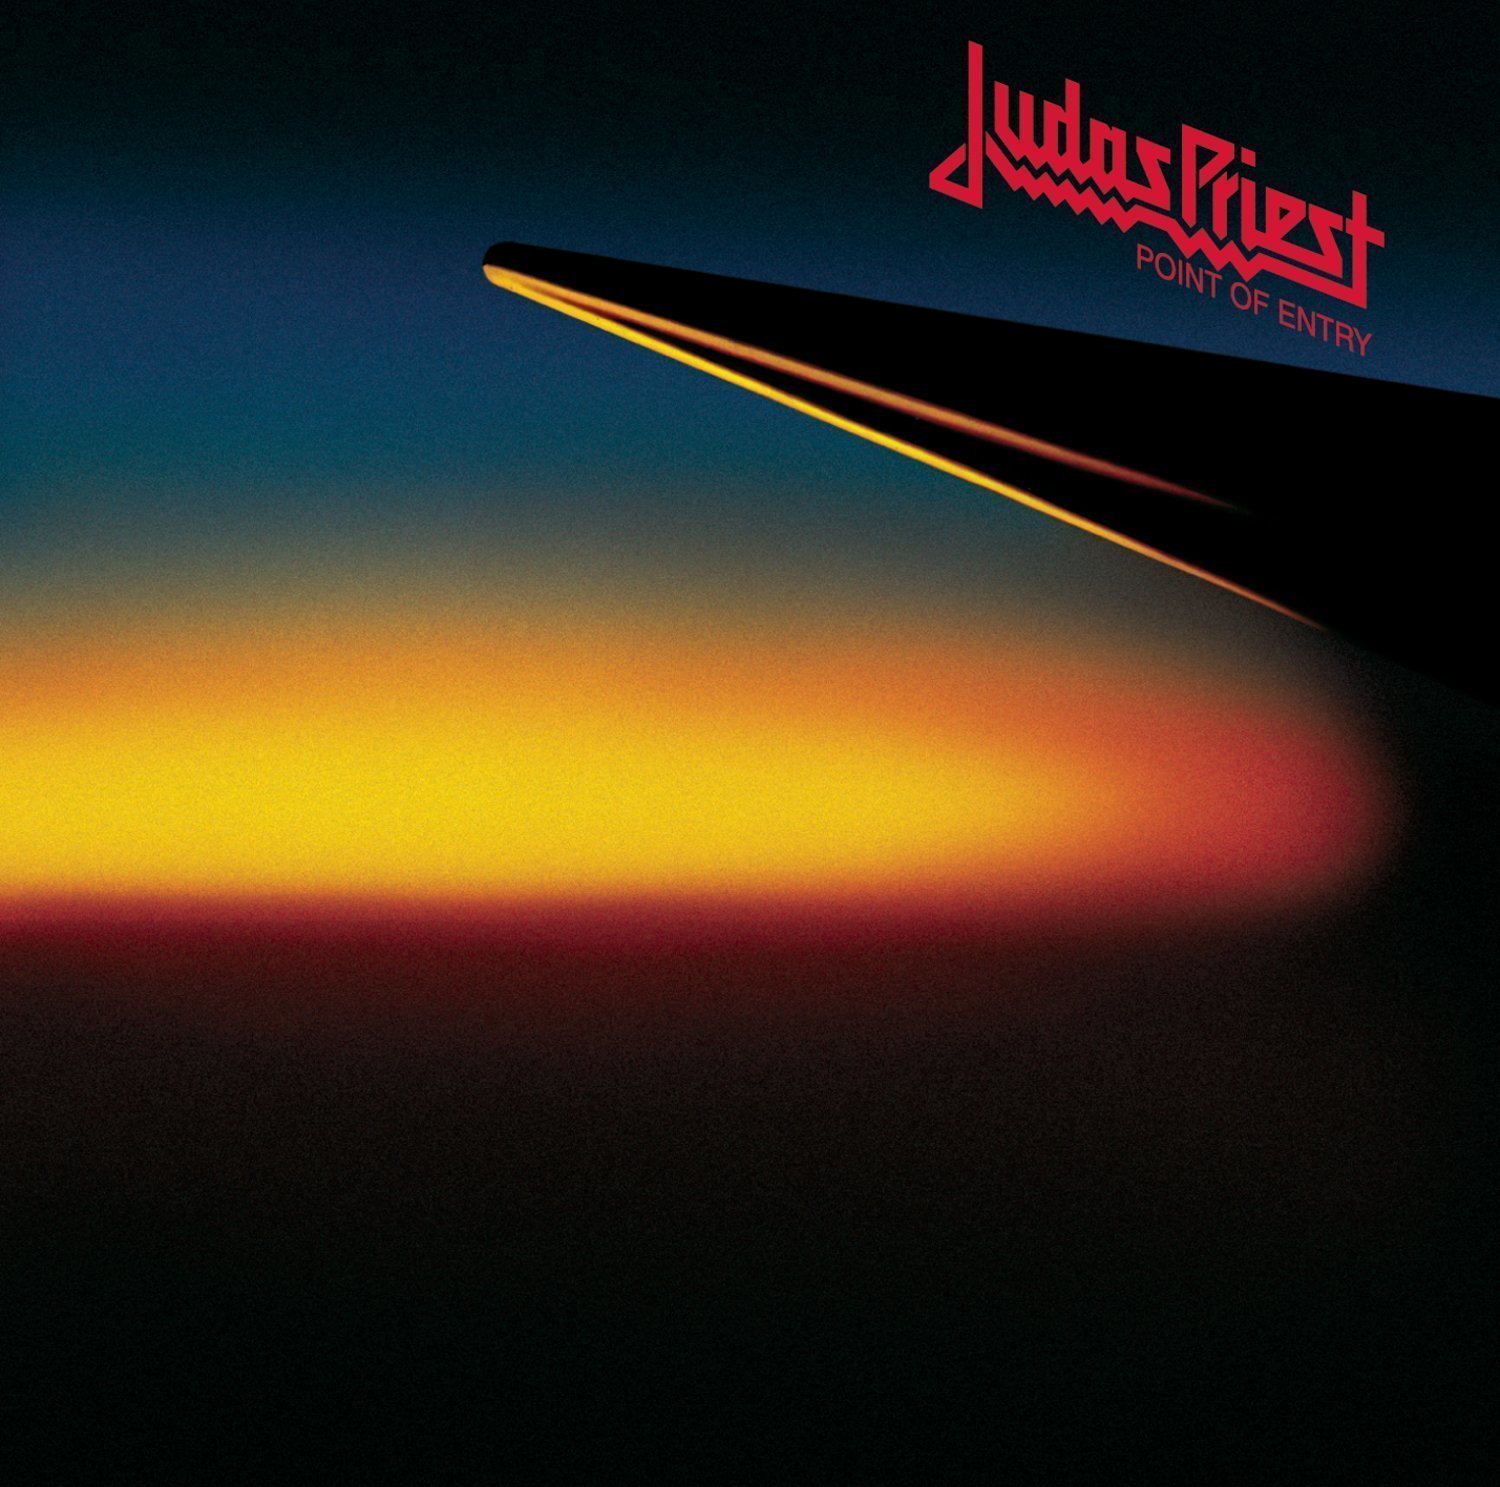 Vinyl Record Judas Priest Point of Entry (LP)